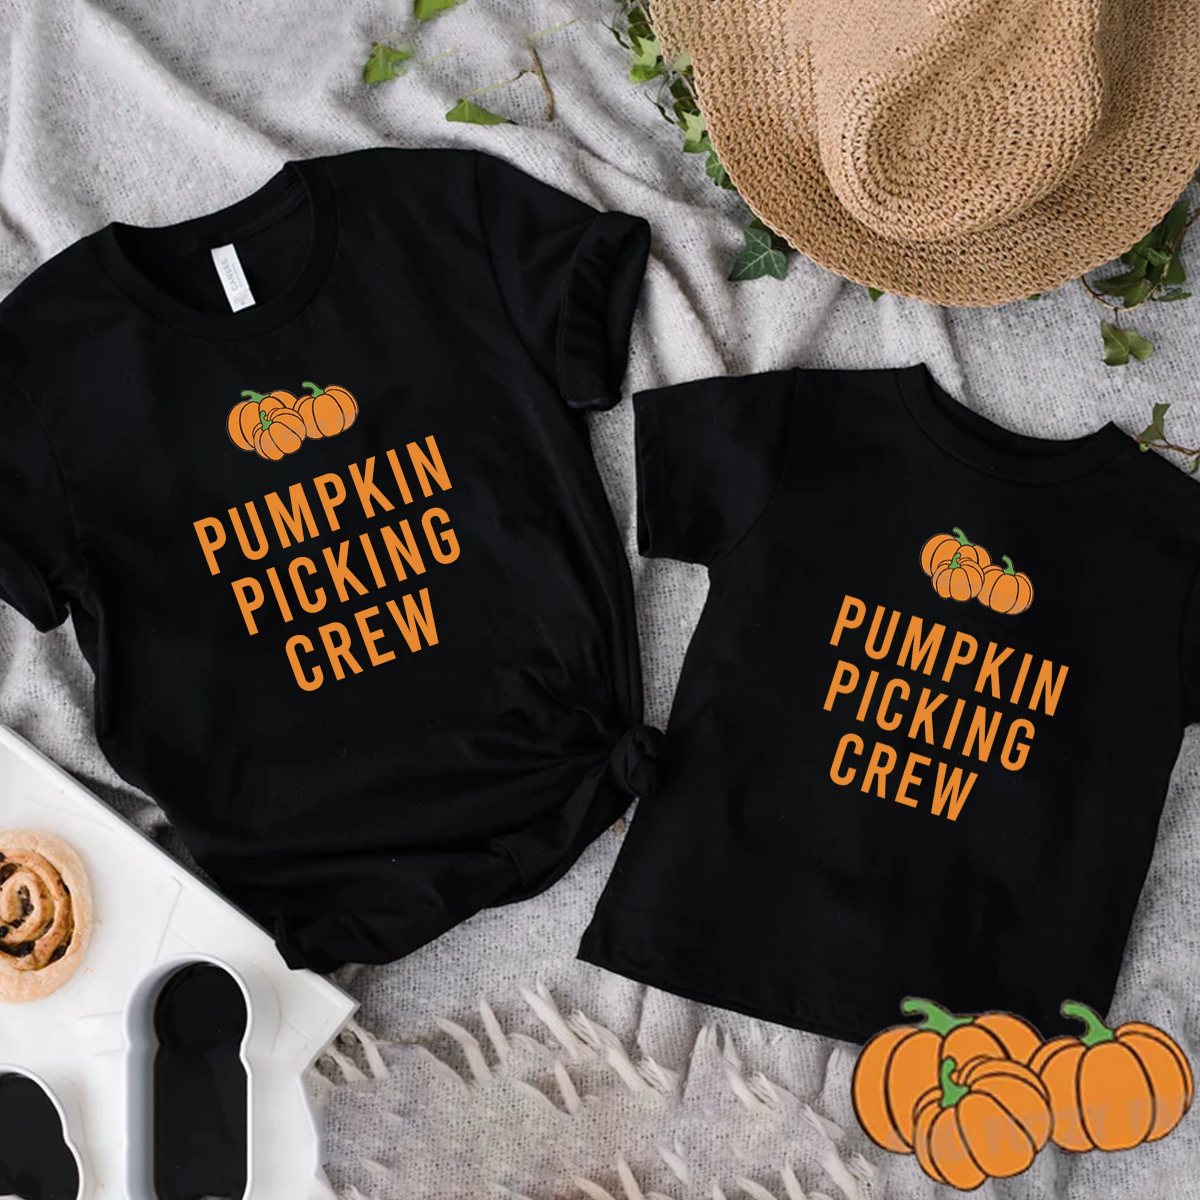 Pumpkin Picking Crew Twinning Shirts - personalisation optional